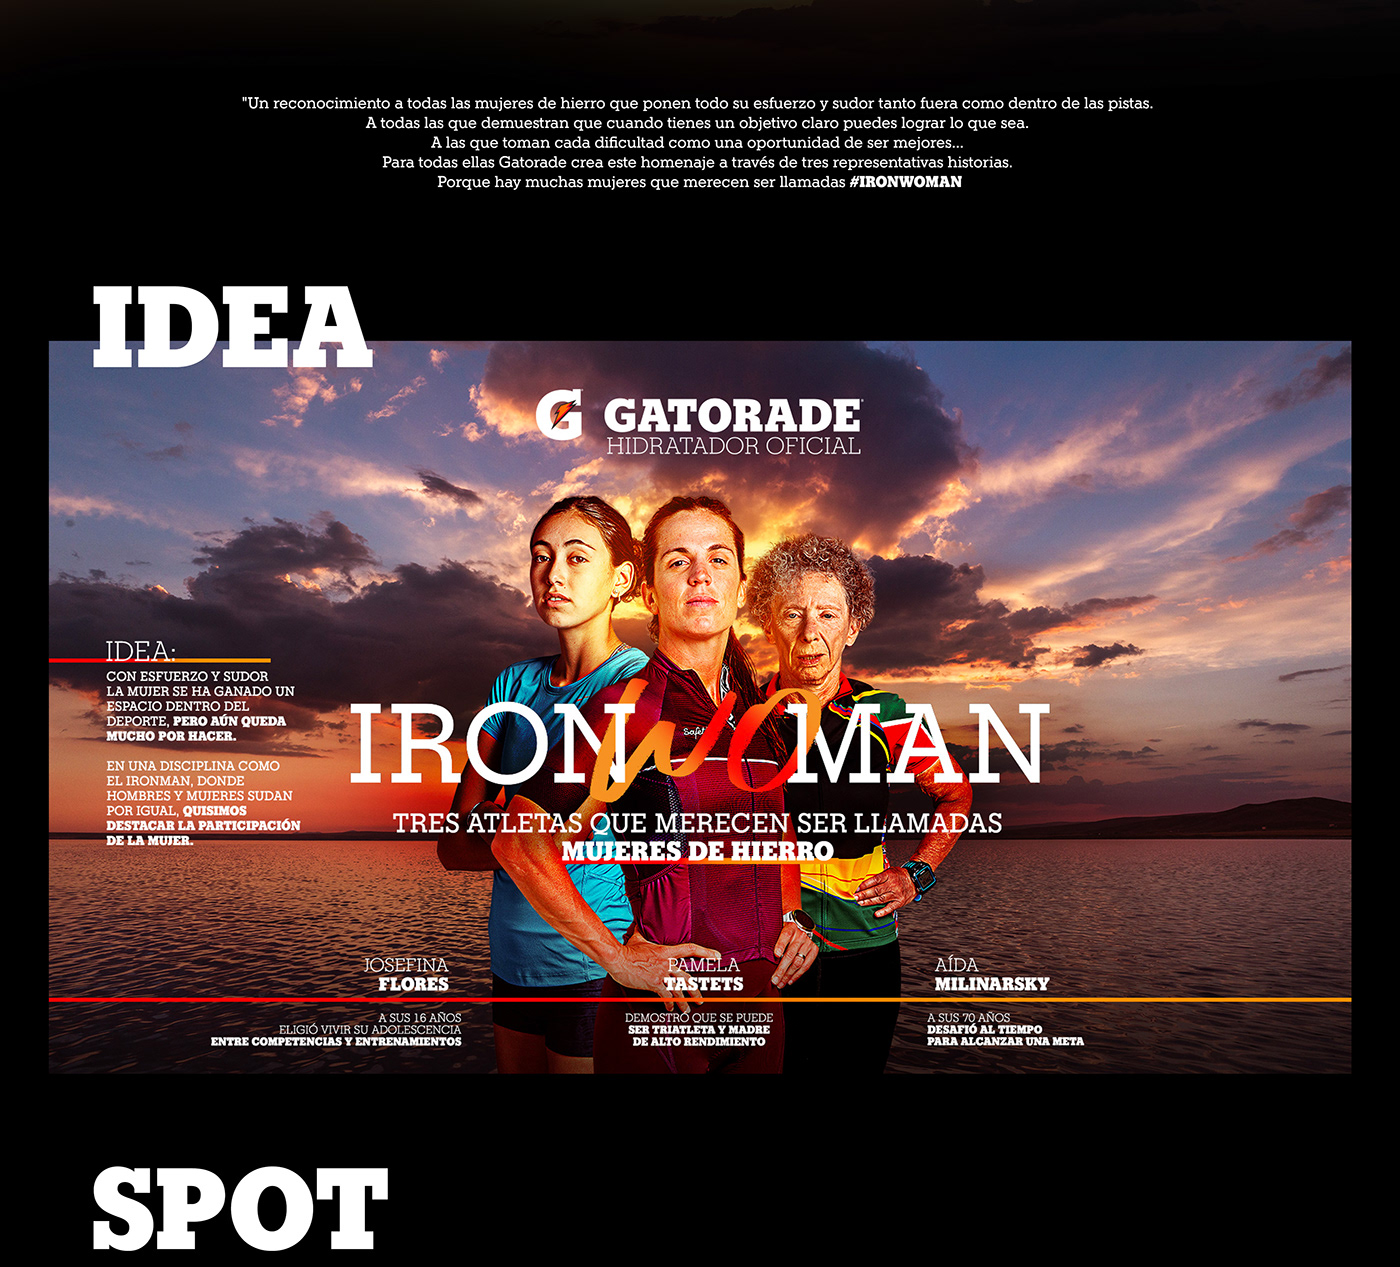 Advertising  copywriting  sports gatorade campaing ironwoman redacción publicidad ironman chile